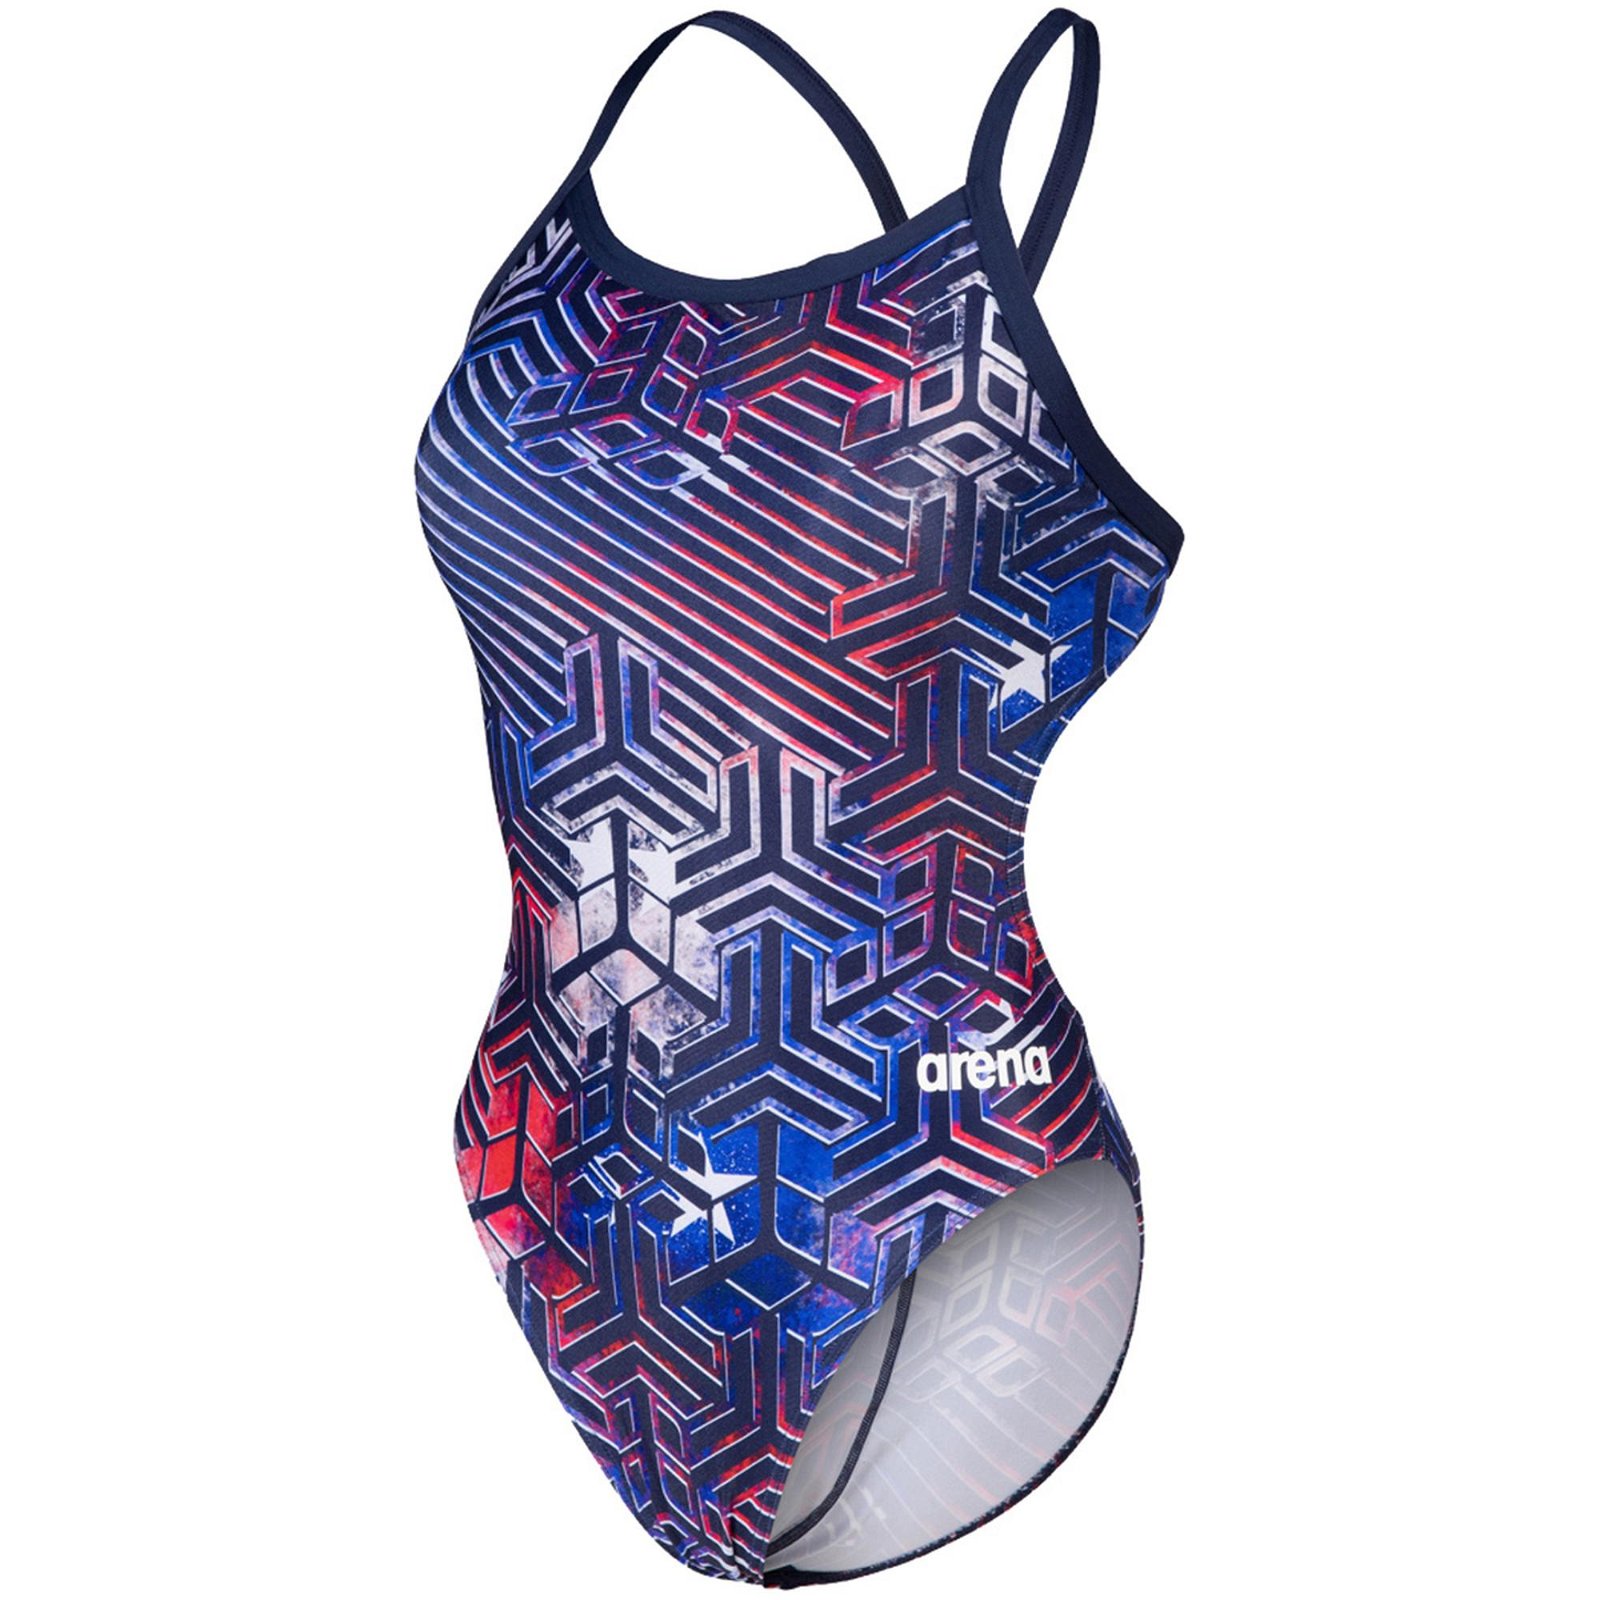 Kikko Pro Kadın Çok Renkli Yüzücü Mayo 005902704